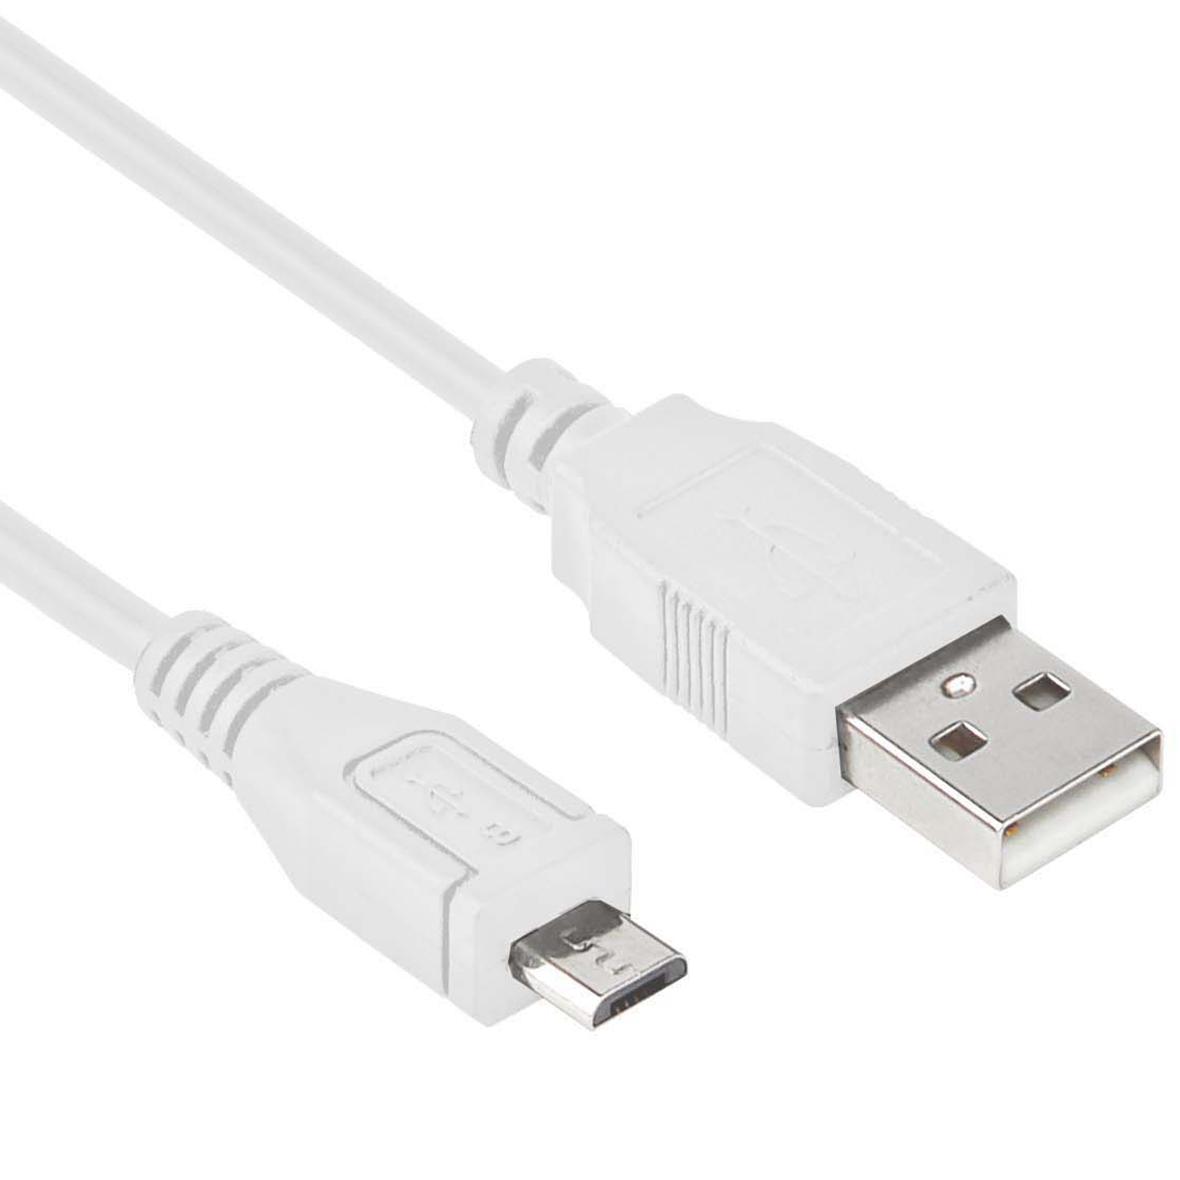 USB 2.0 micro kabel - Allteq